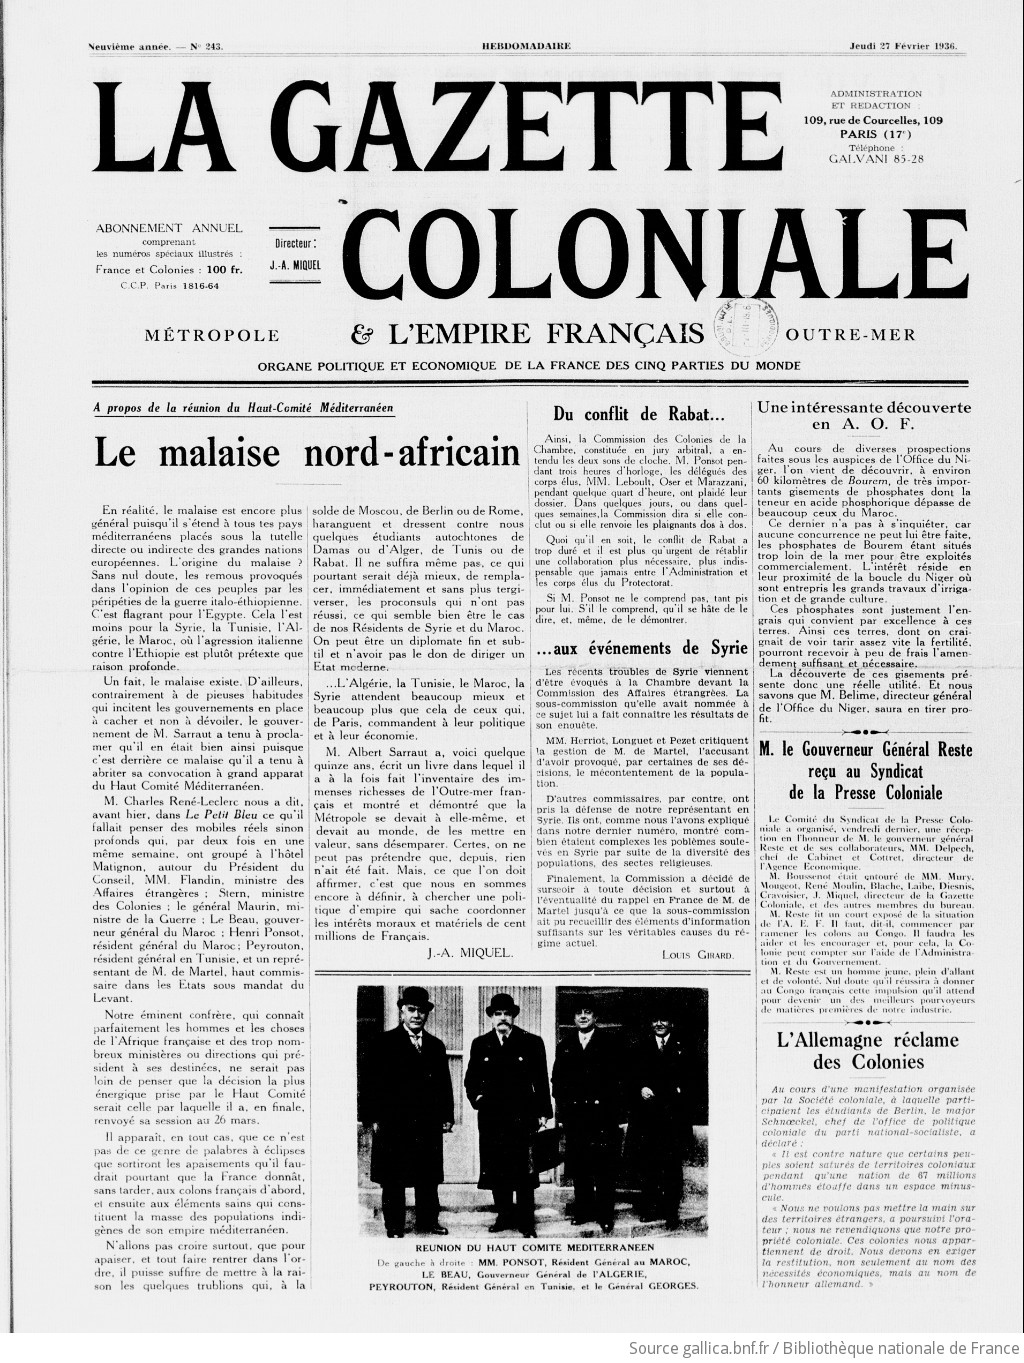 La Gazette coloniale [